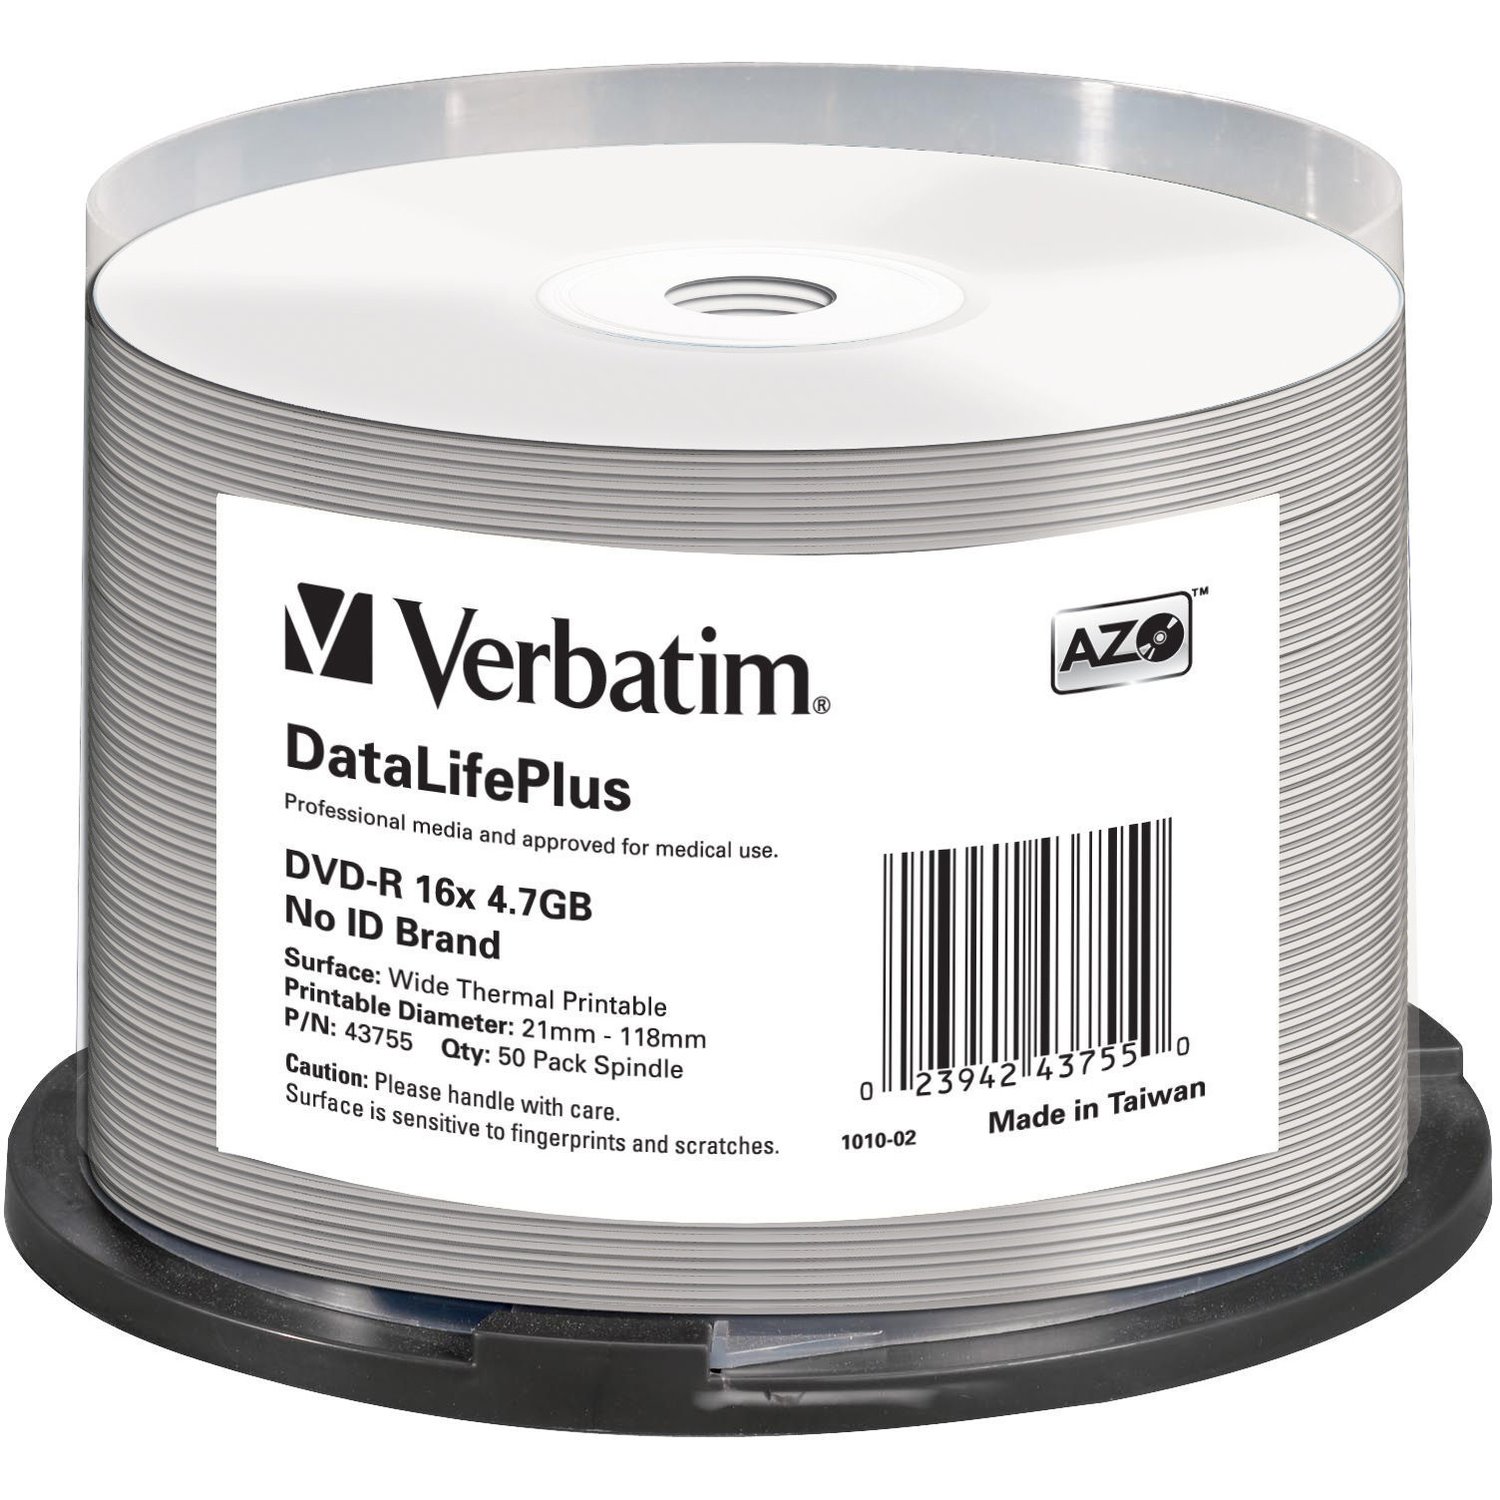 Verbatim DataLifePlus 43755 DVD Recordable Media - DVD-R - 16x - 4.70 GB - 50 Pack Spindle